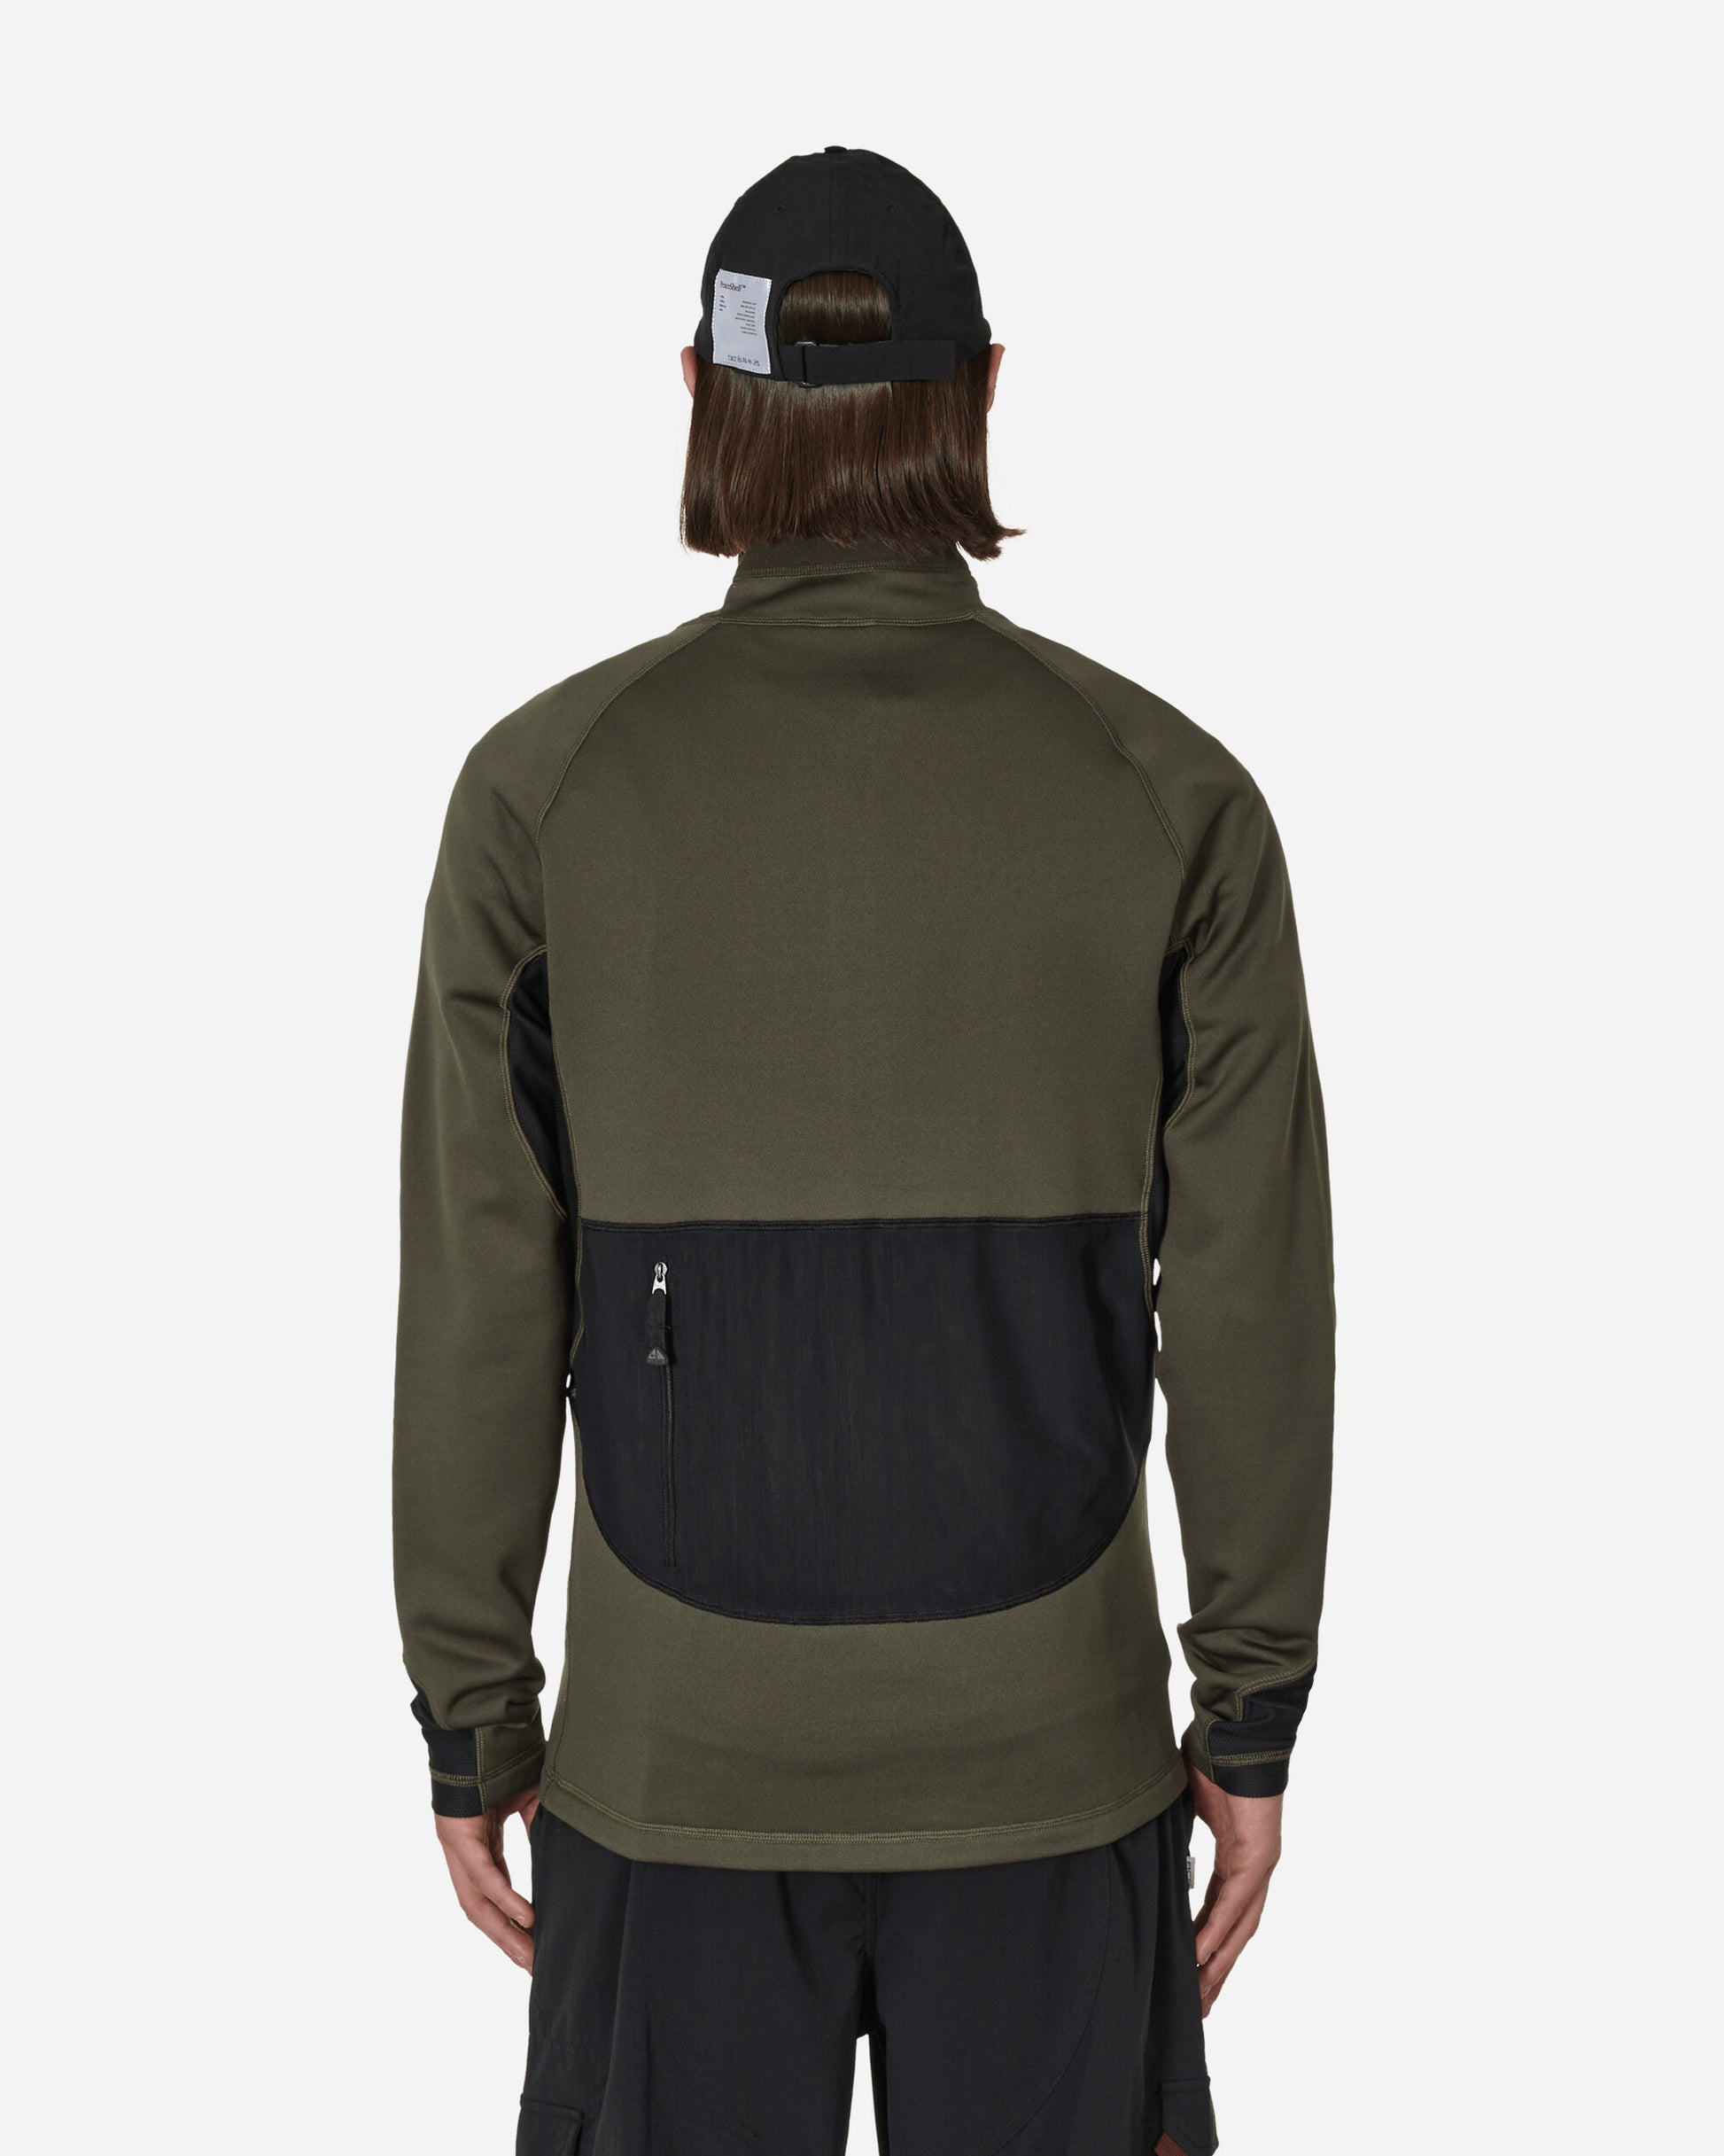 Nike Acg  Oregon Srs Polartec Top Cargo Khaki/Black T-Shirts Shortsleeve DV9220-325